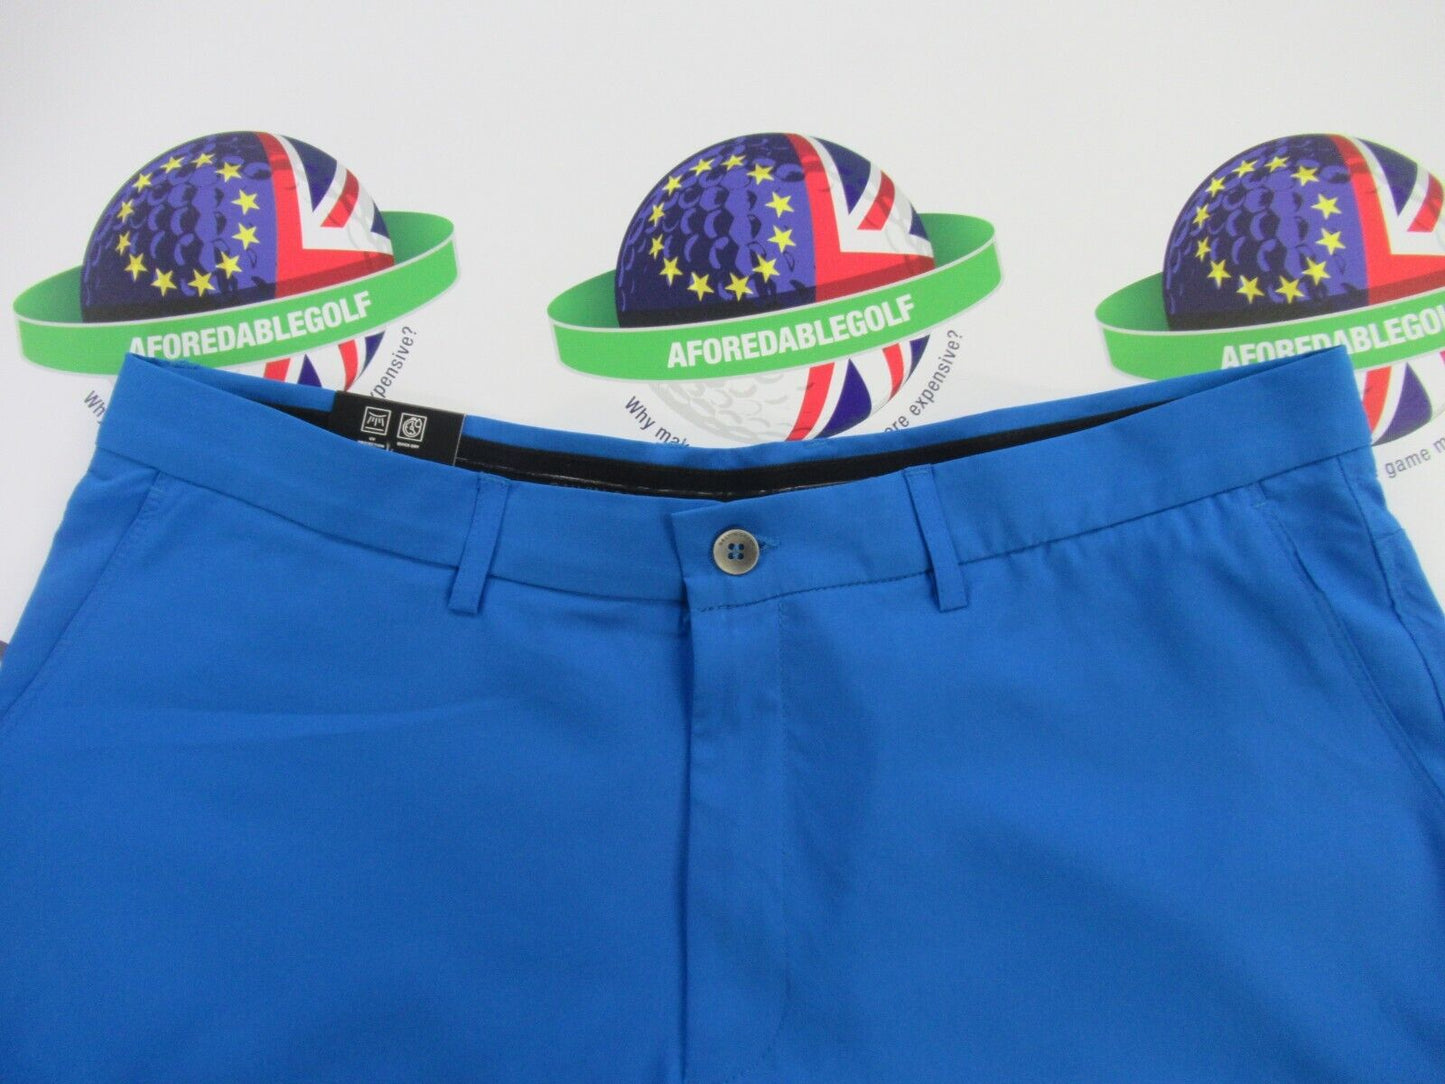 galvin green percy ventil8 plus blue golf shorts waist 36"